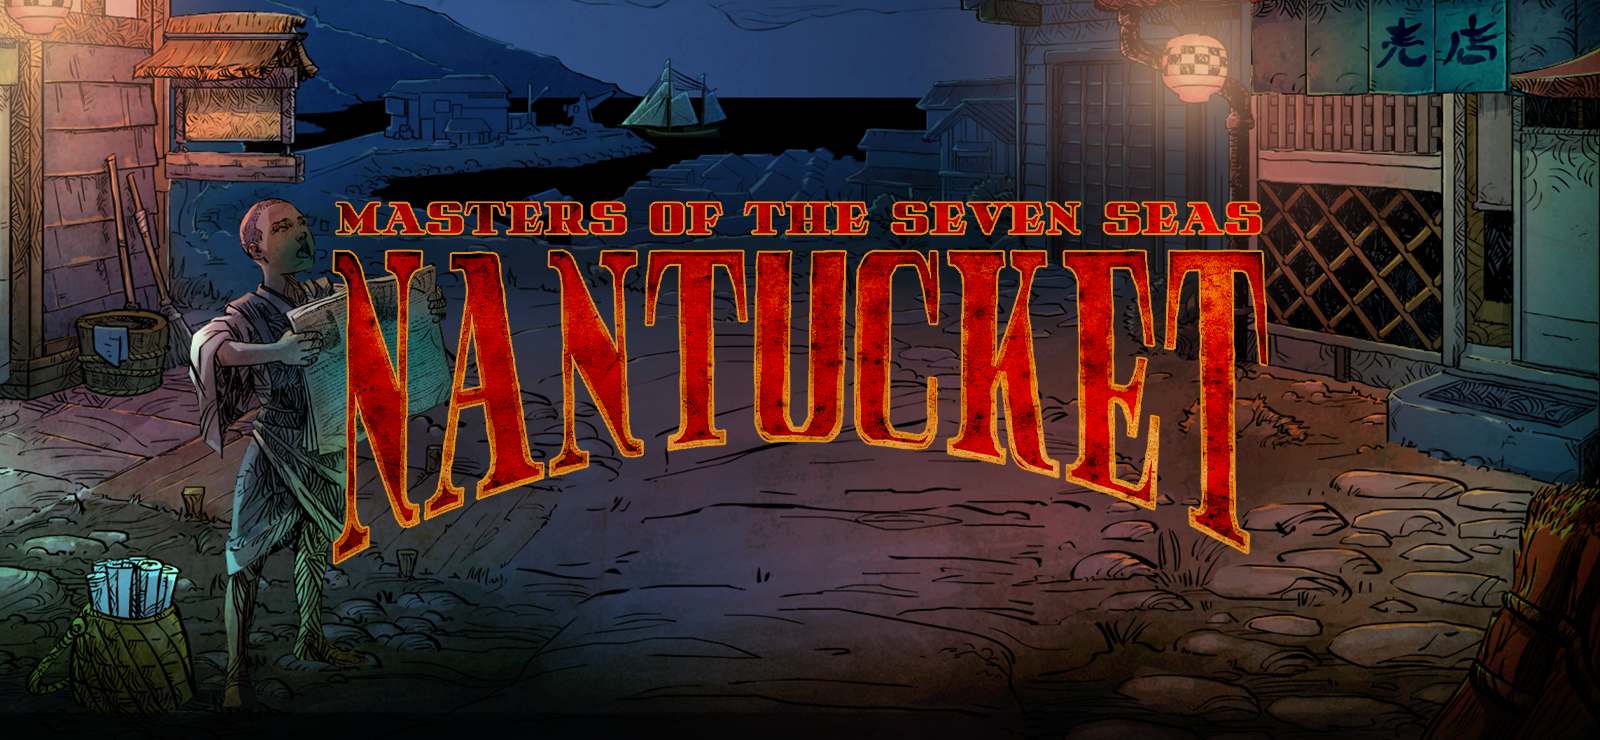 Nantucket - Masters Of The Seven Seas